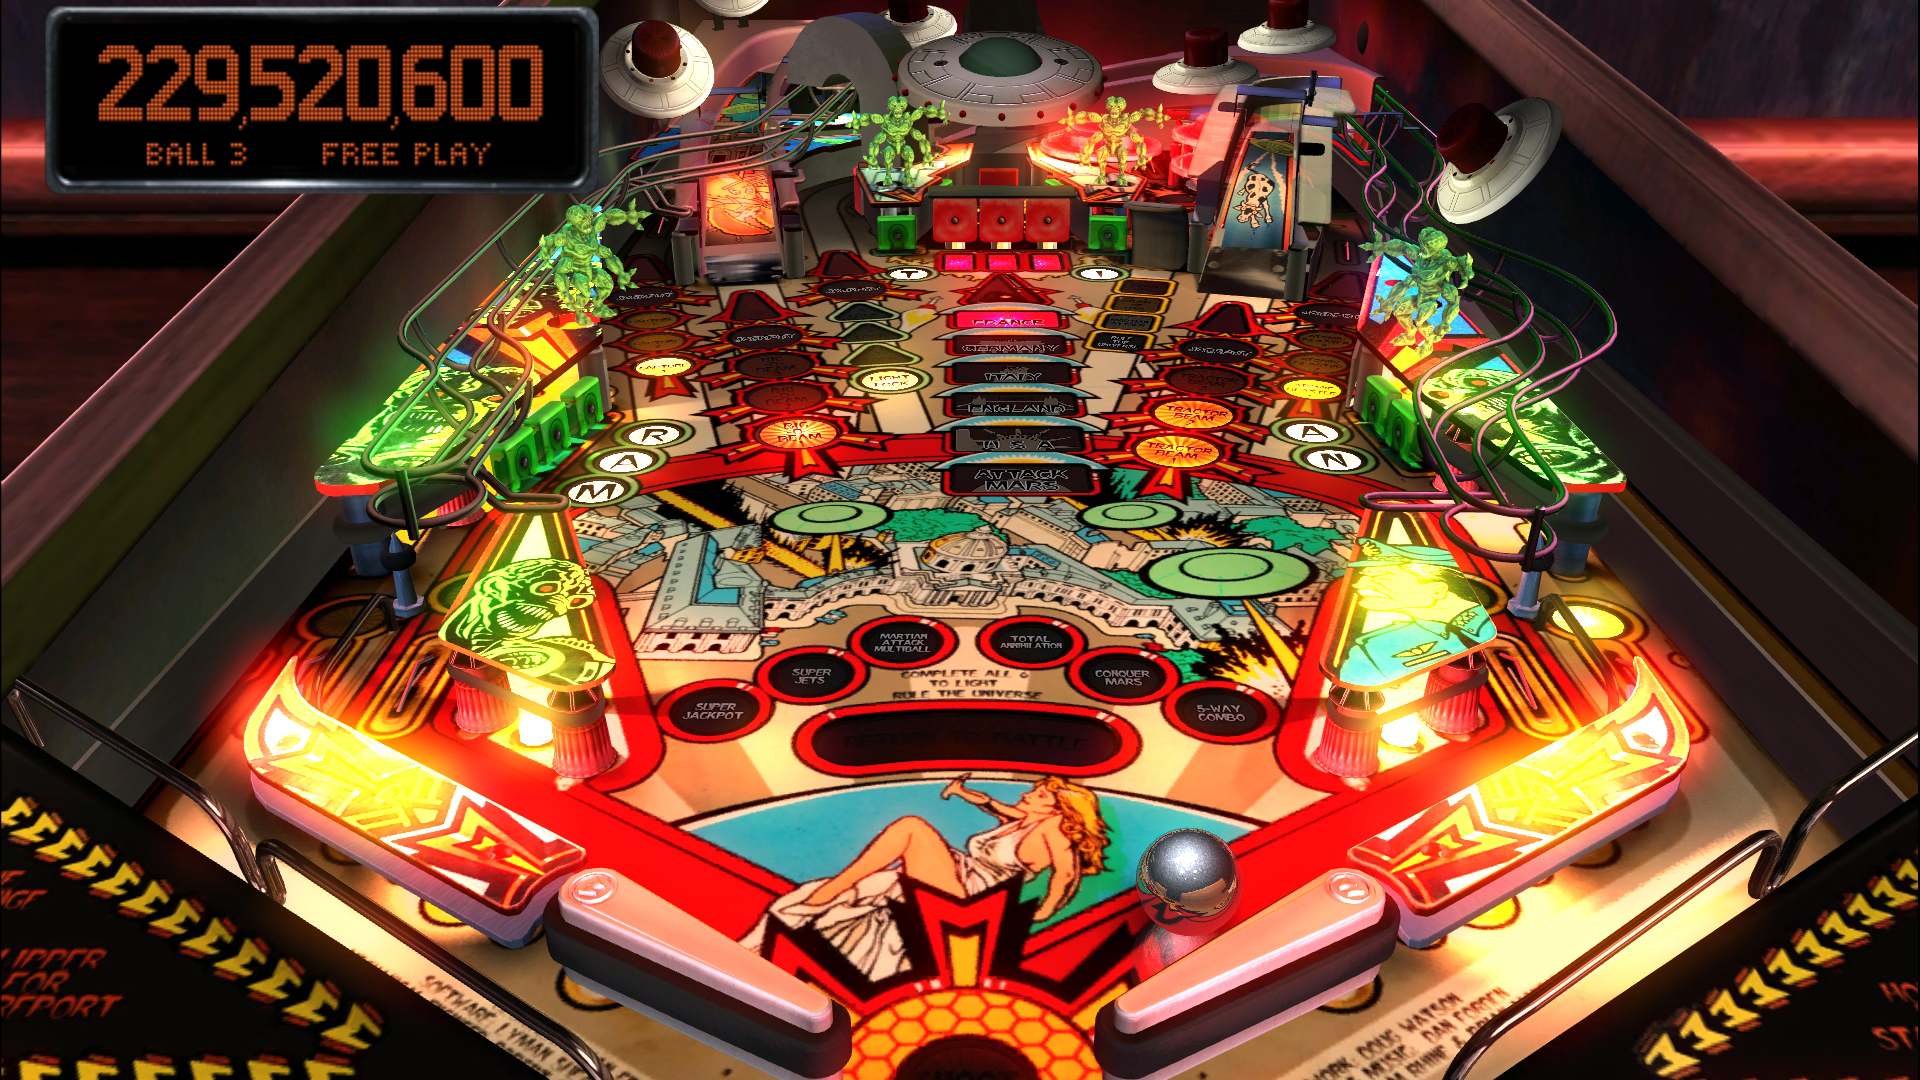 Download Latest HD Wallpaper of, Games, Pinball Arcade